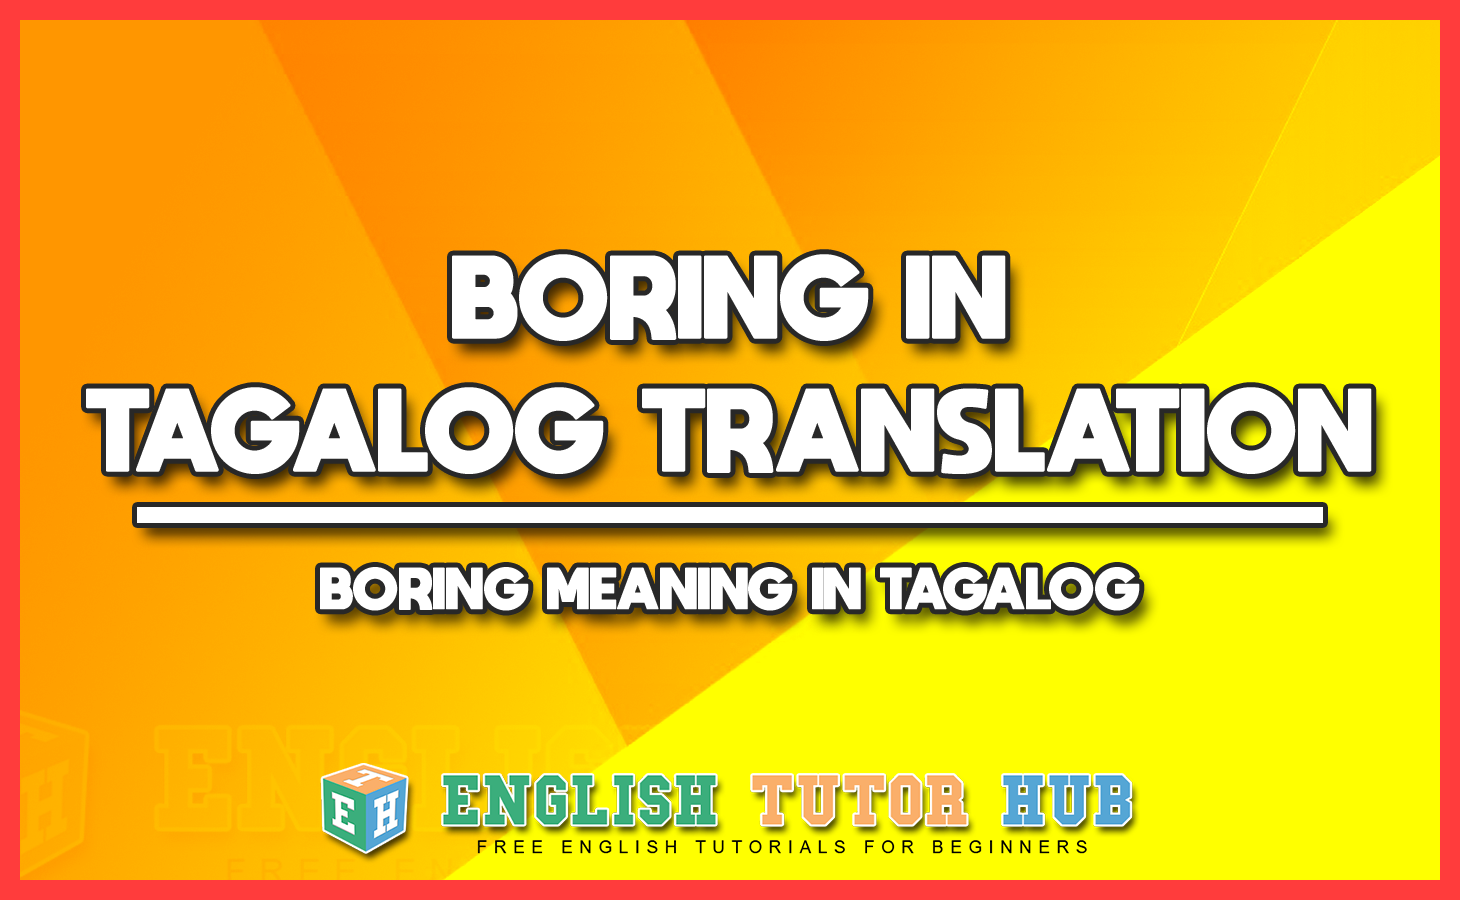 BORING IN TAGALOG TRANSLATION - BORING MEANING IN TAGALOG